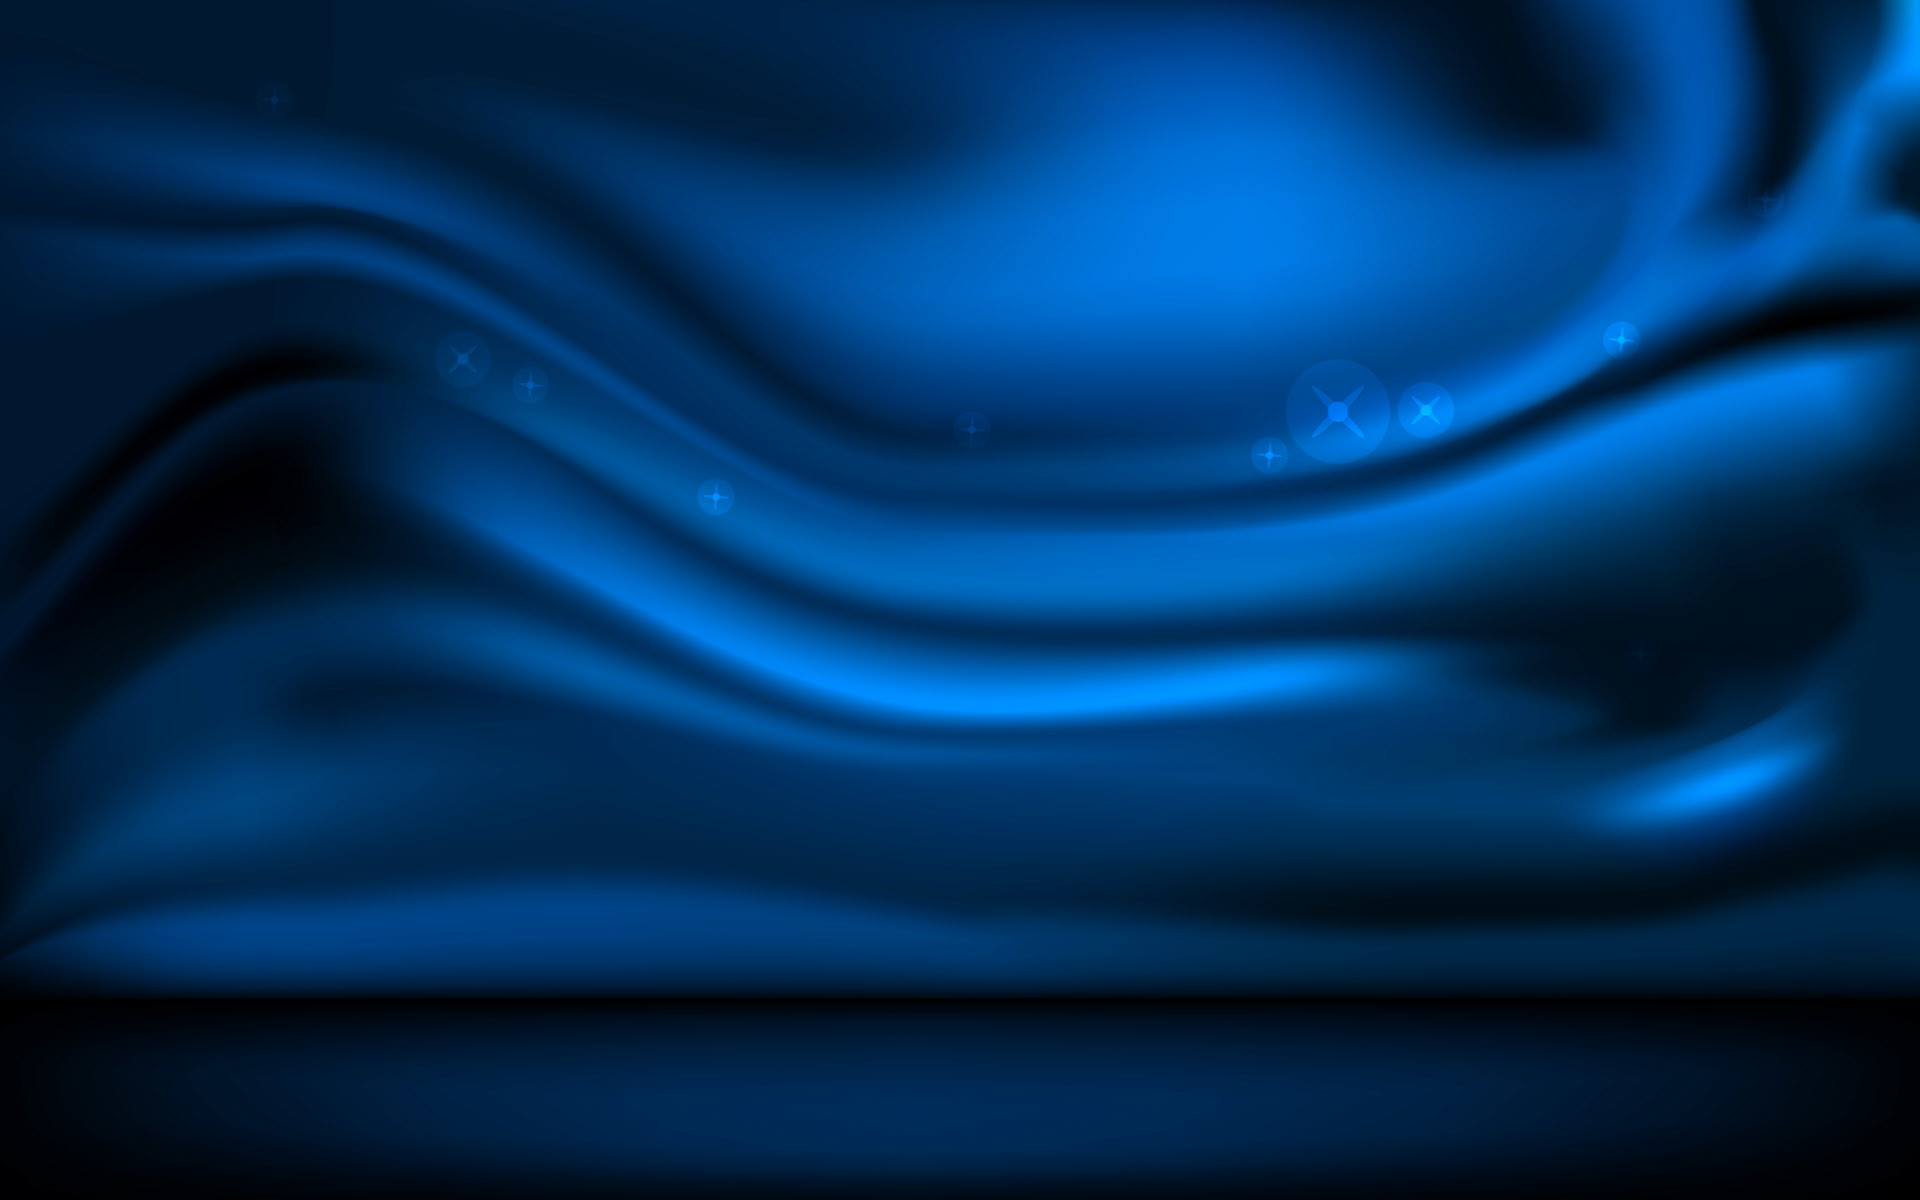 Dark Blue Backgrounds | wallpaper, wallpaper hd, background desktop